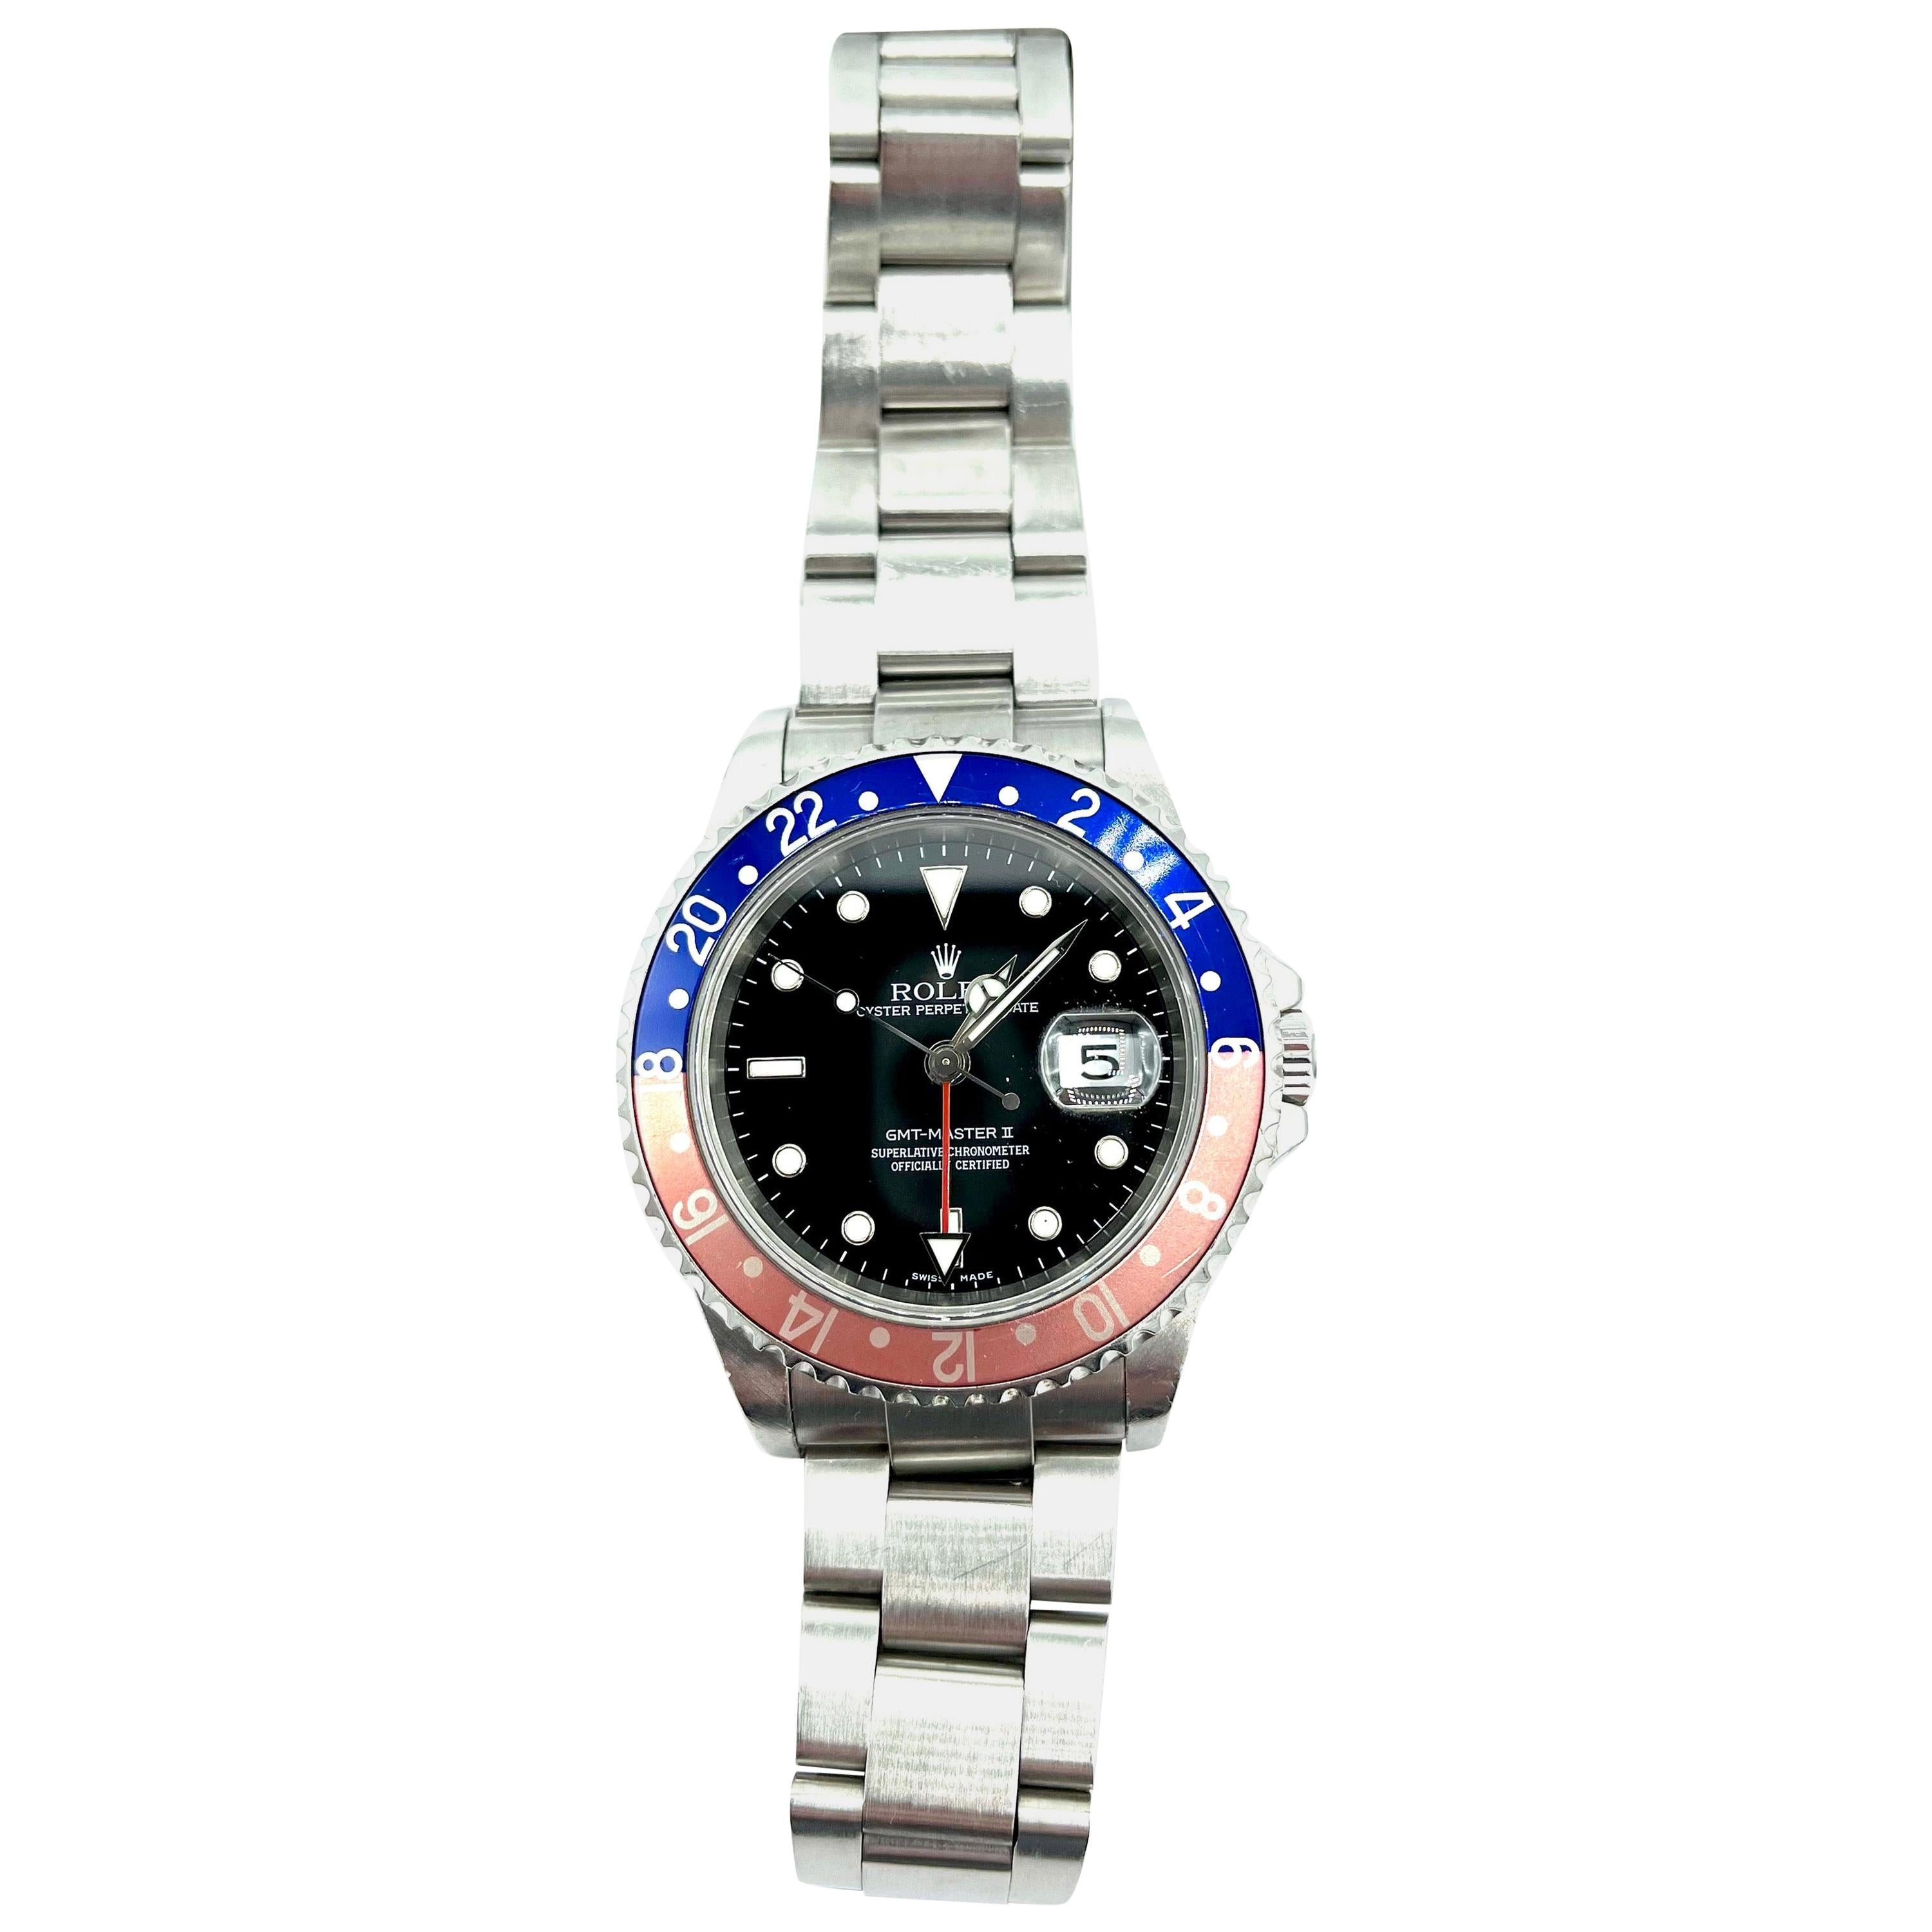 2004 Rolex GMT Master II "Pepsi" Bezel Stainless Steel Watch